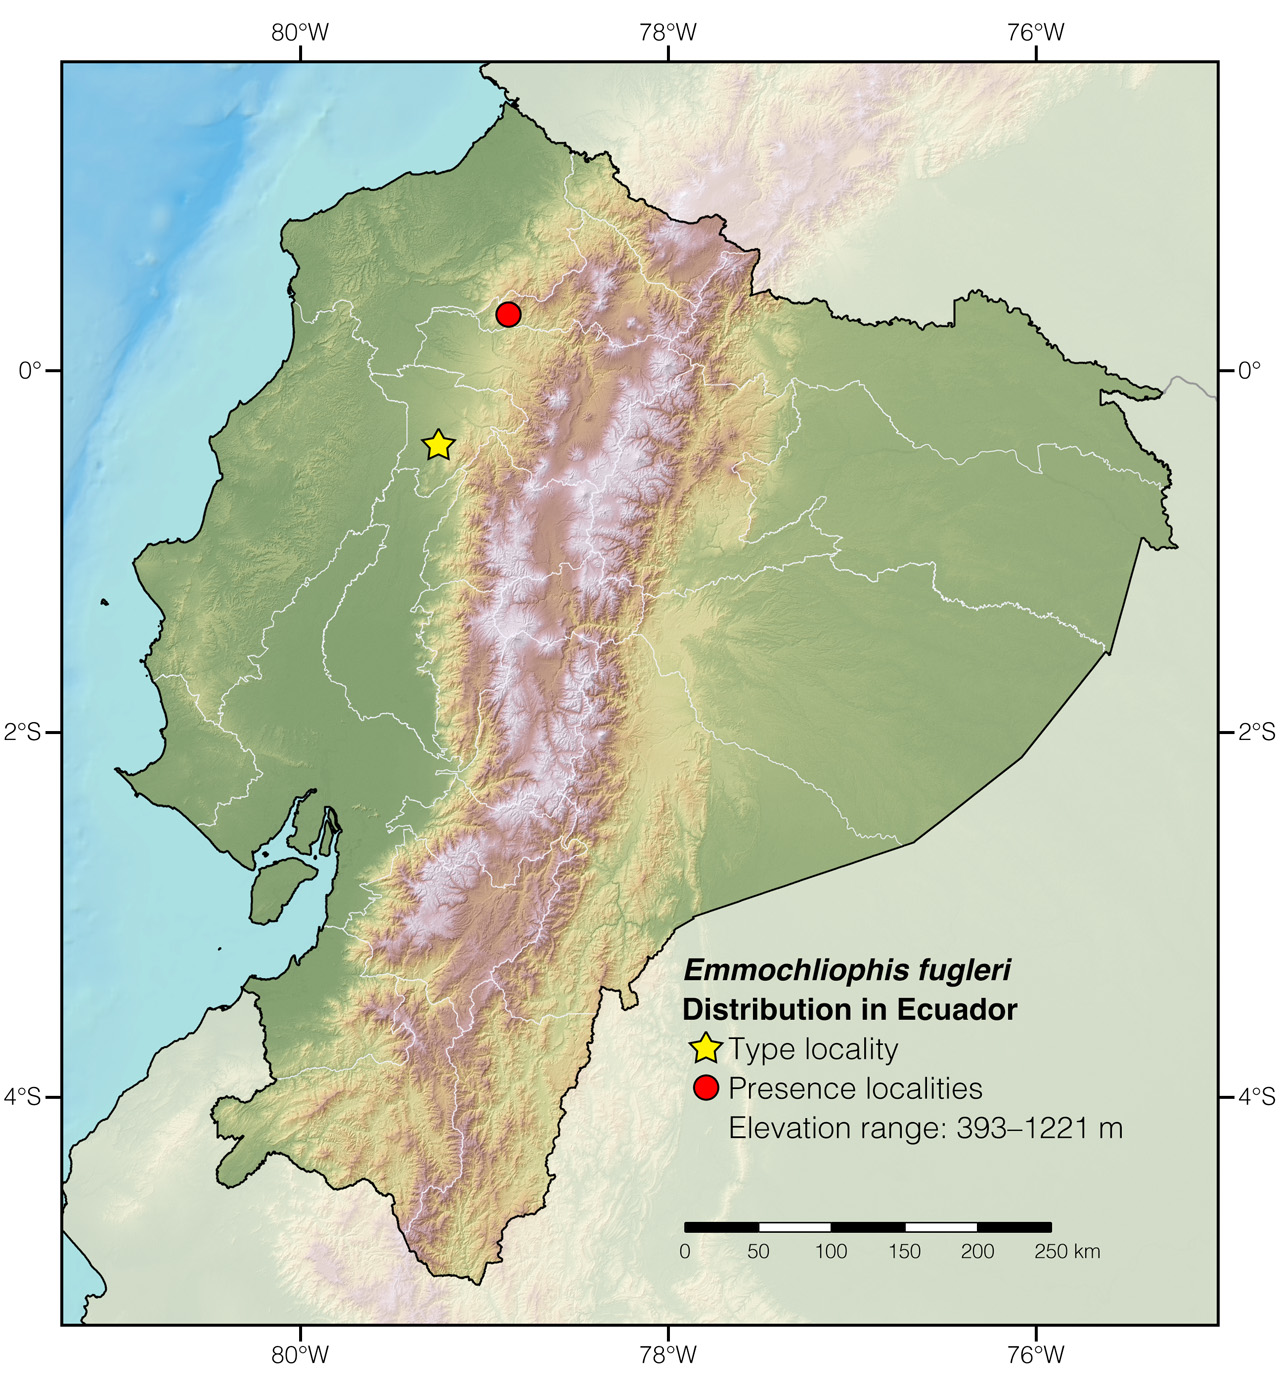 Distribution of Emmochliophis fugleri in Ecuador